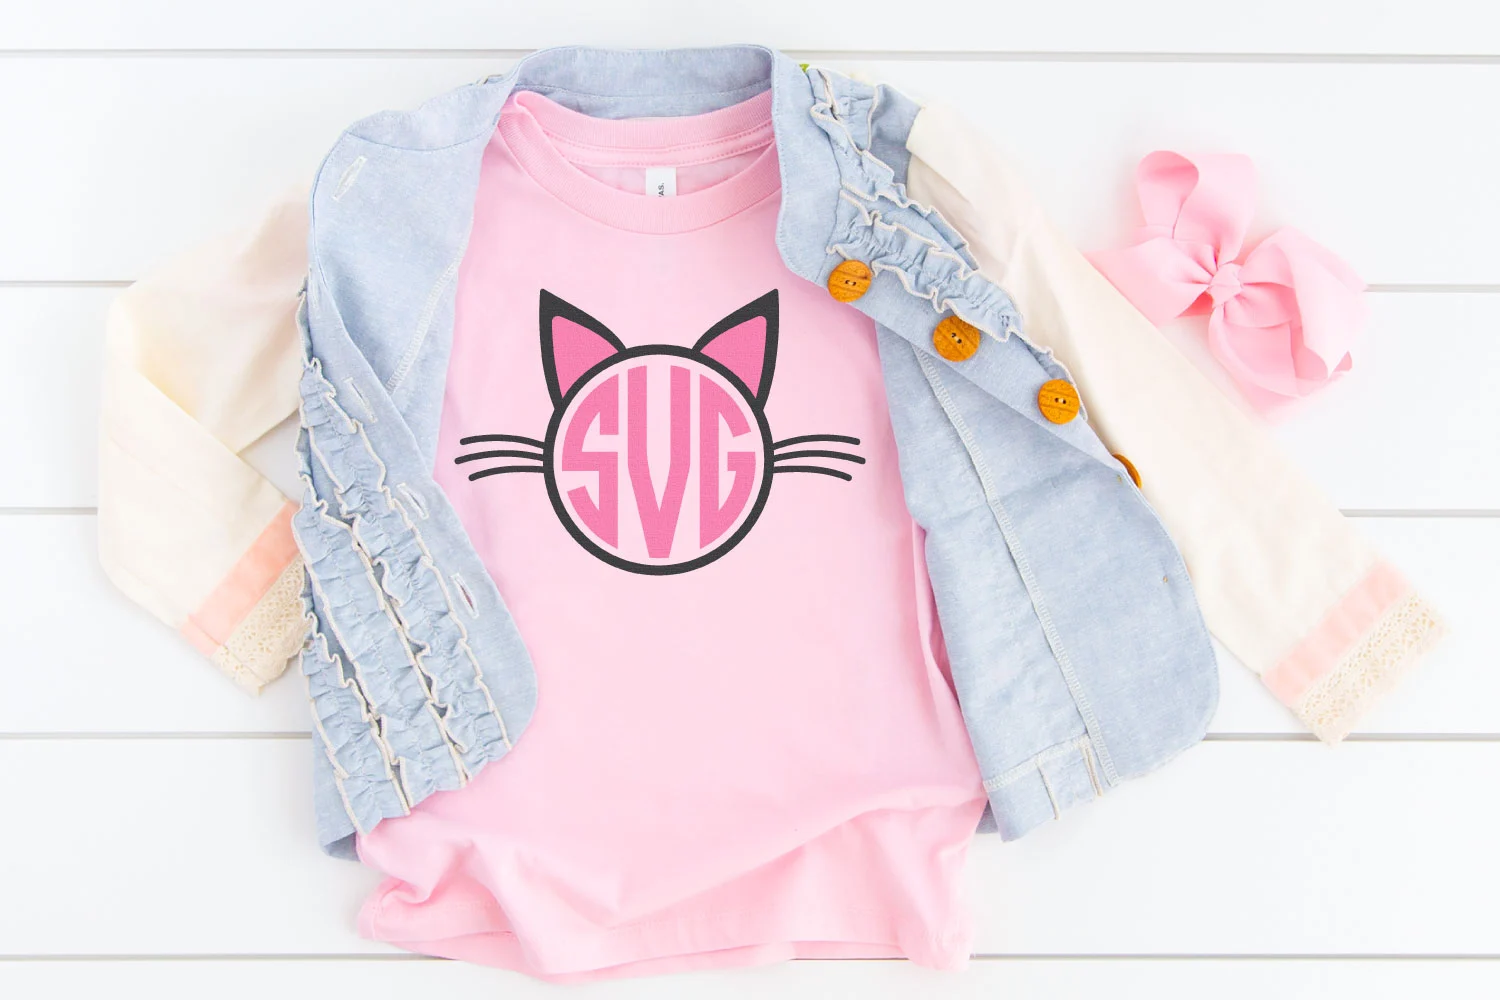 A pink t-shirt with a Cat Monogram design.